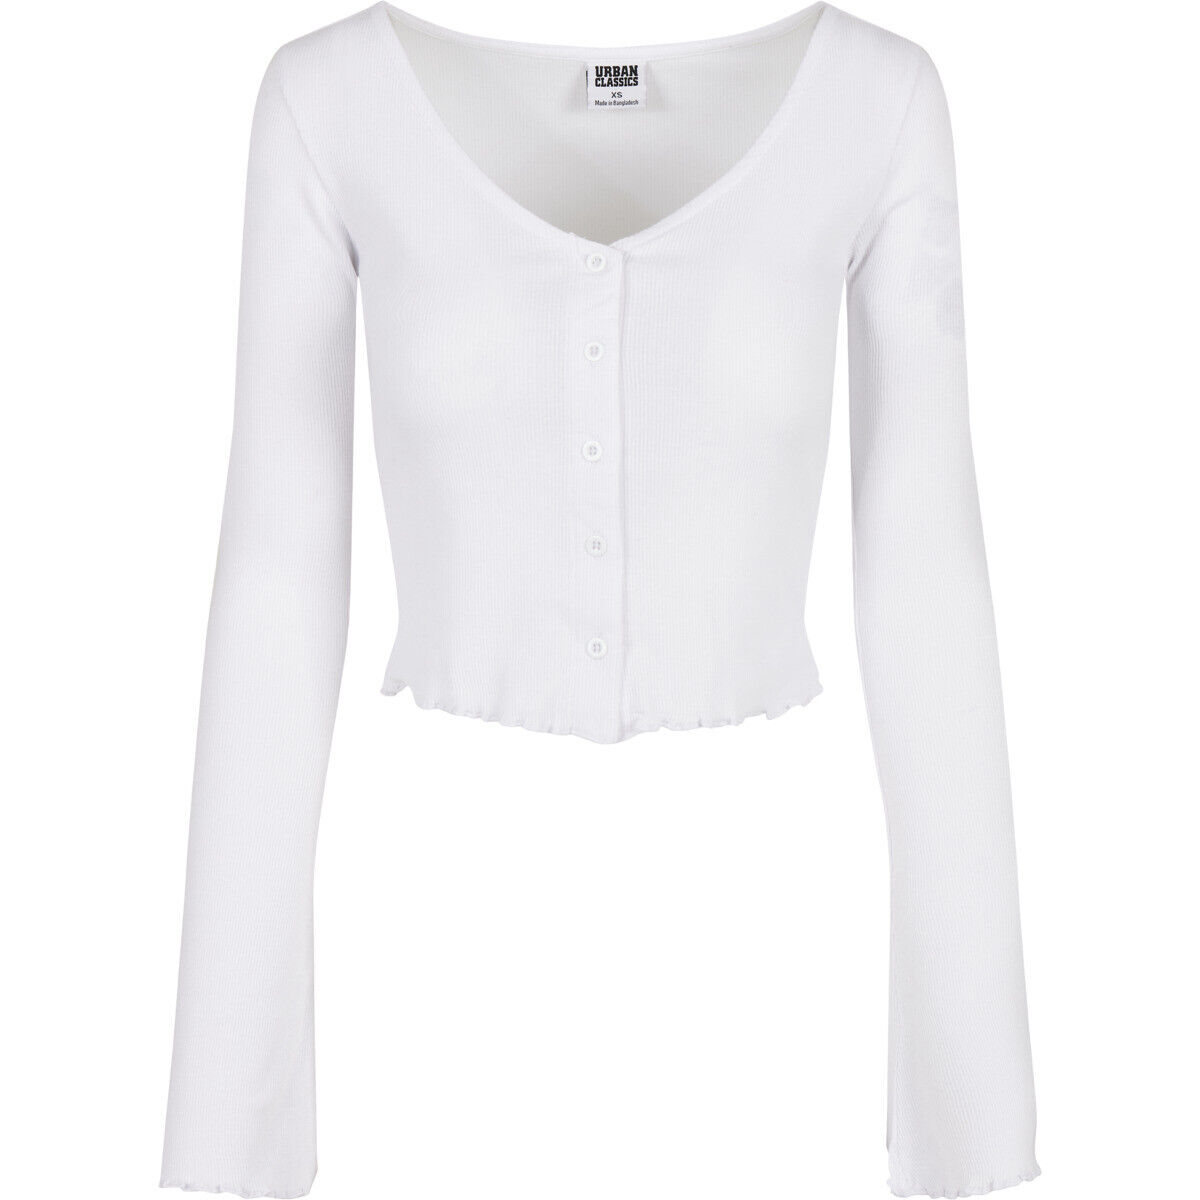 Urban Classics Ladies Cropped Rib Cardigan Top Shirt Oberbekleidung Langarm  | eBay